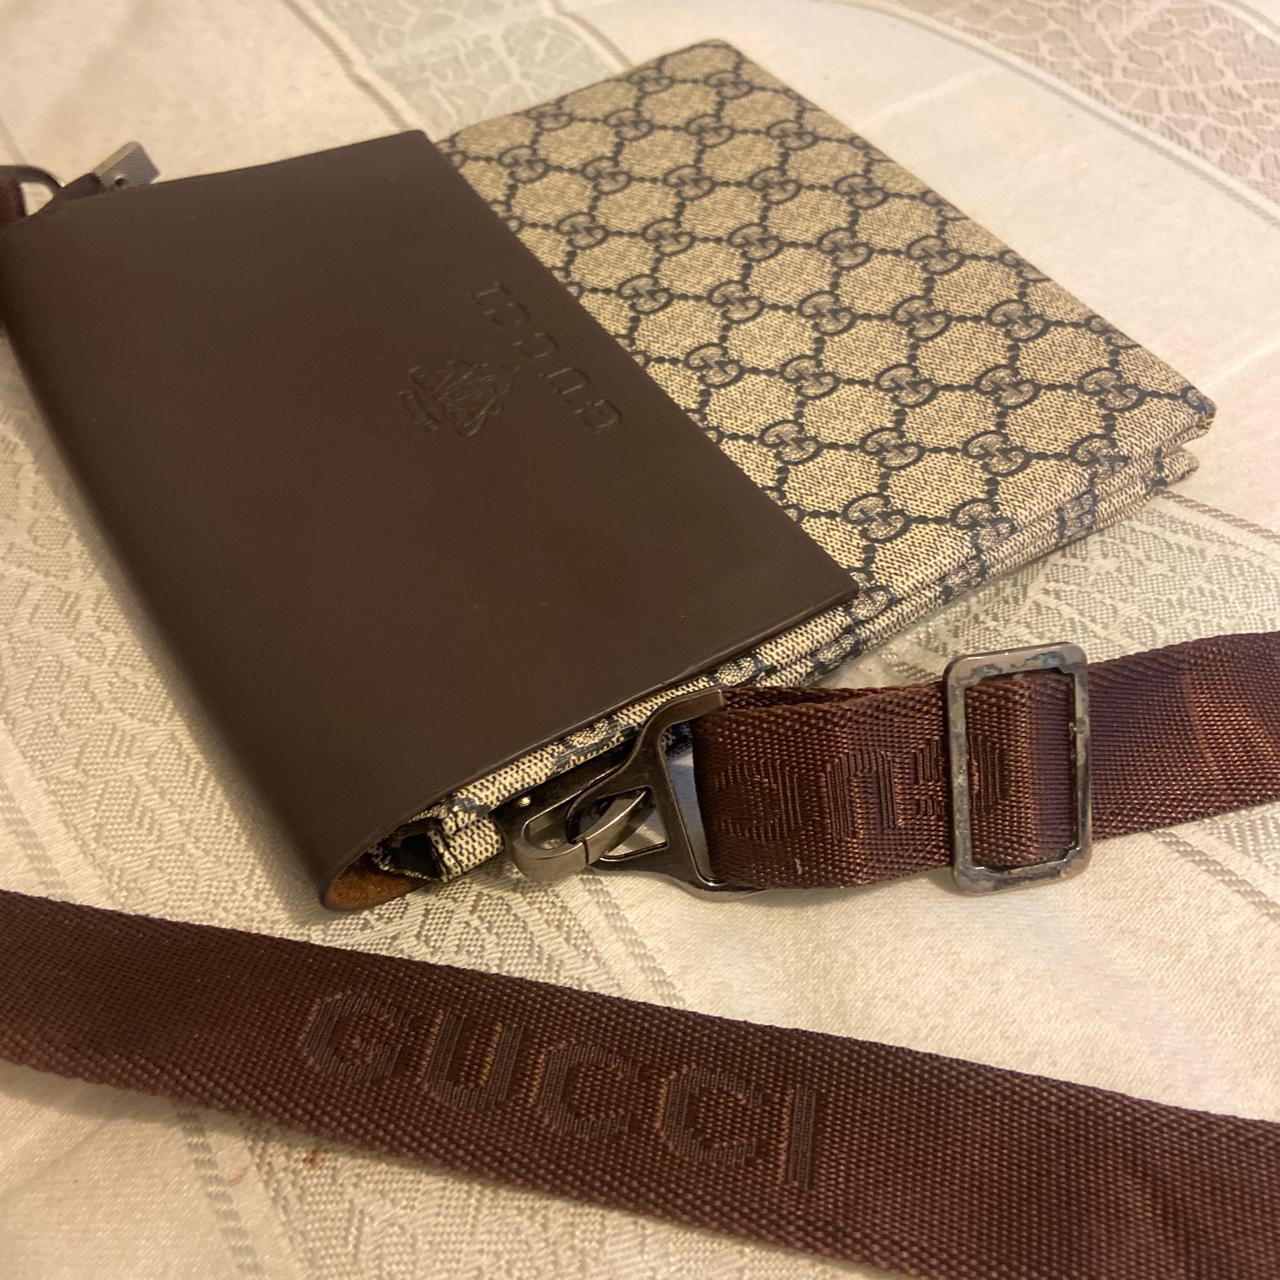 Rare authentic vintage leather Gucci GG Supreme - Depop